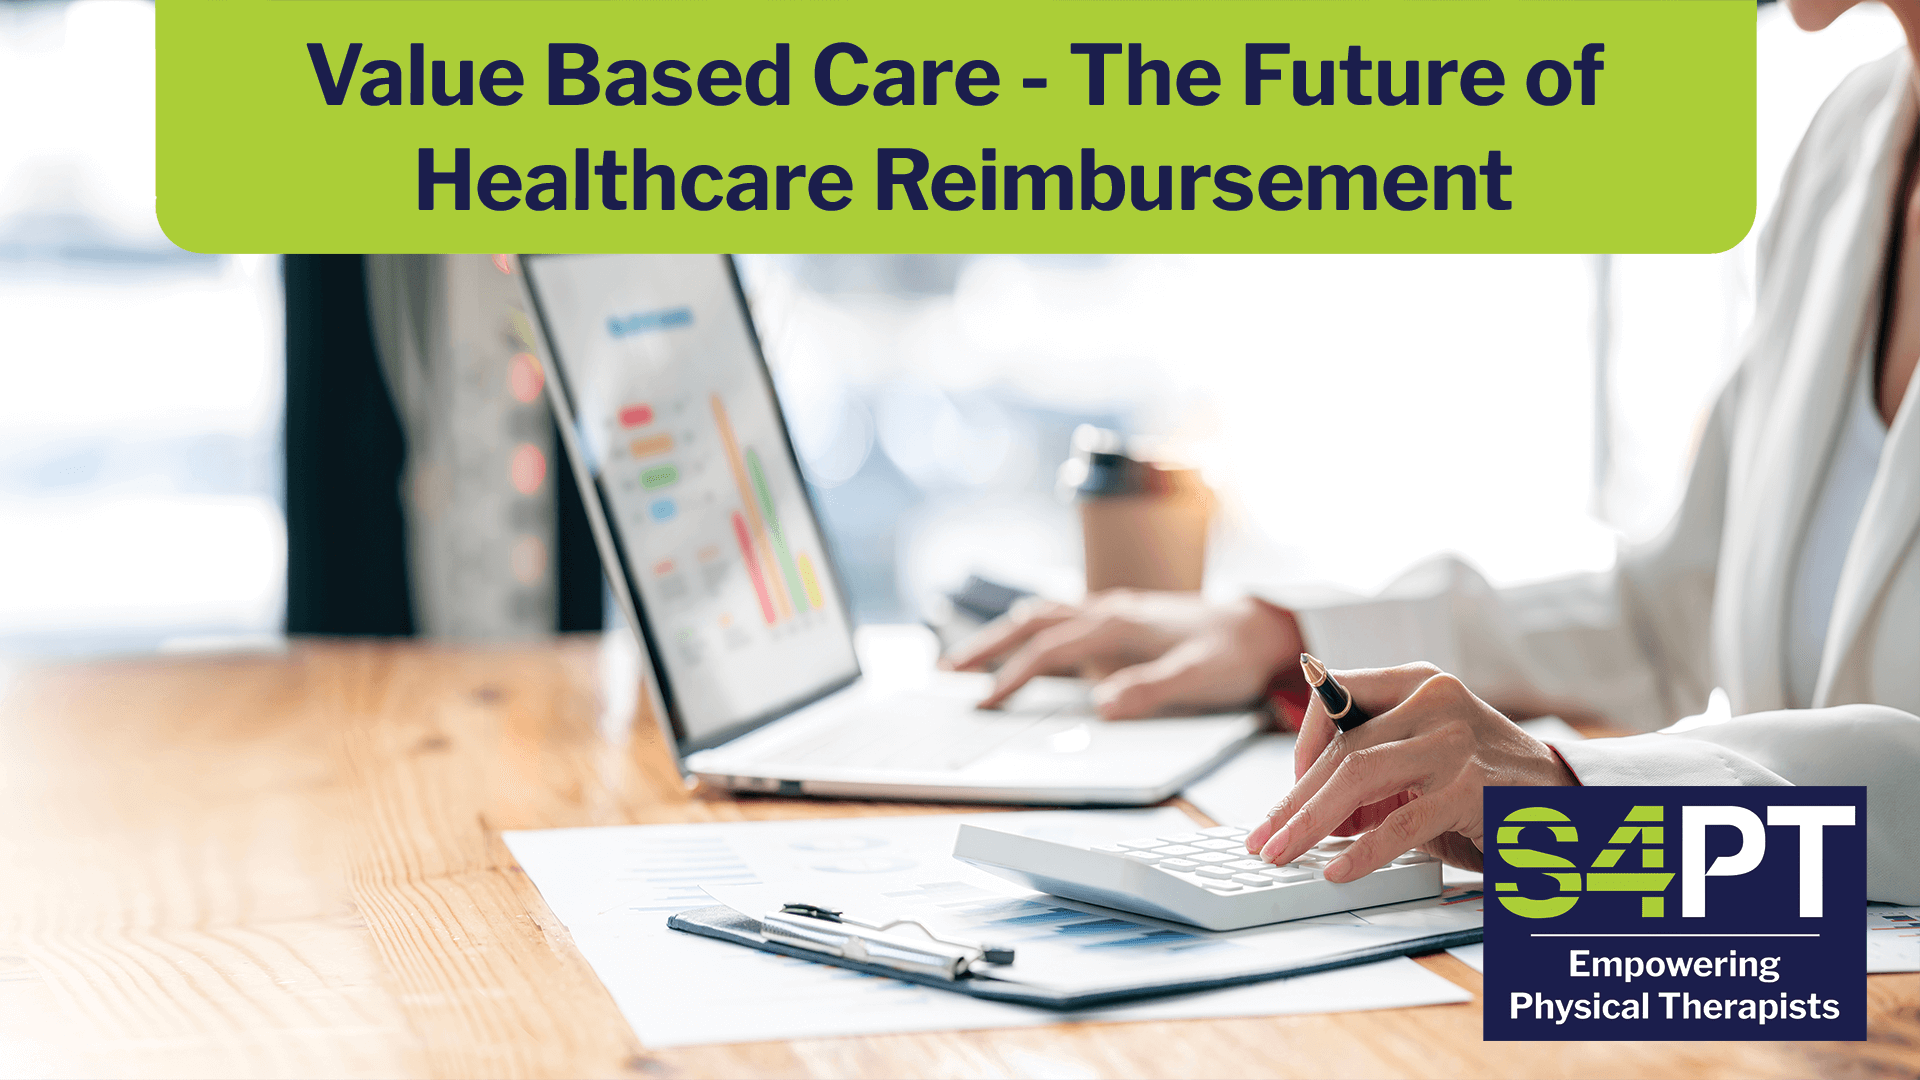 Value-based care is the future of healthcare reimbursement